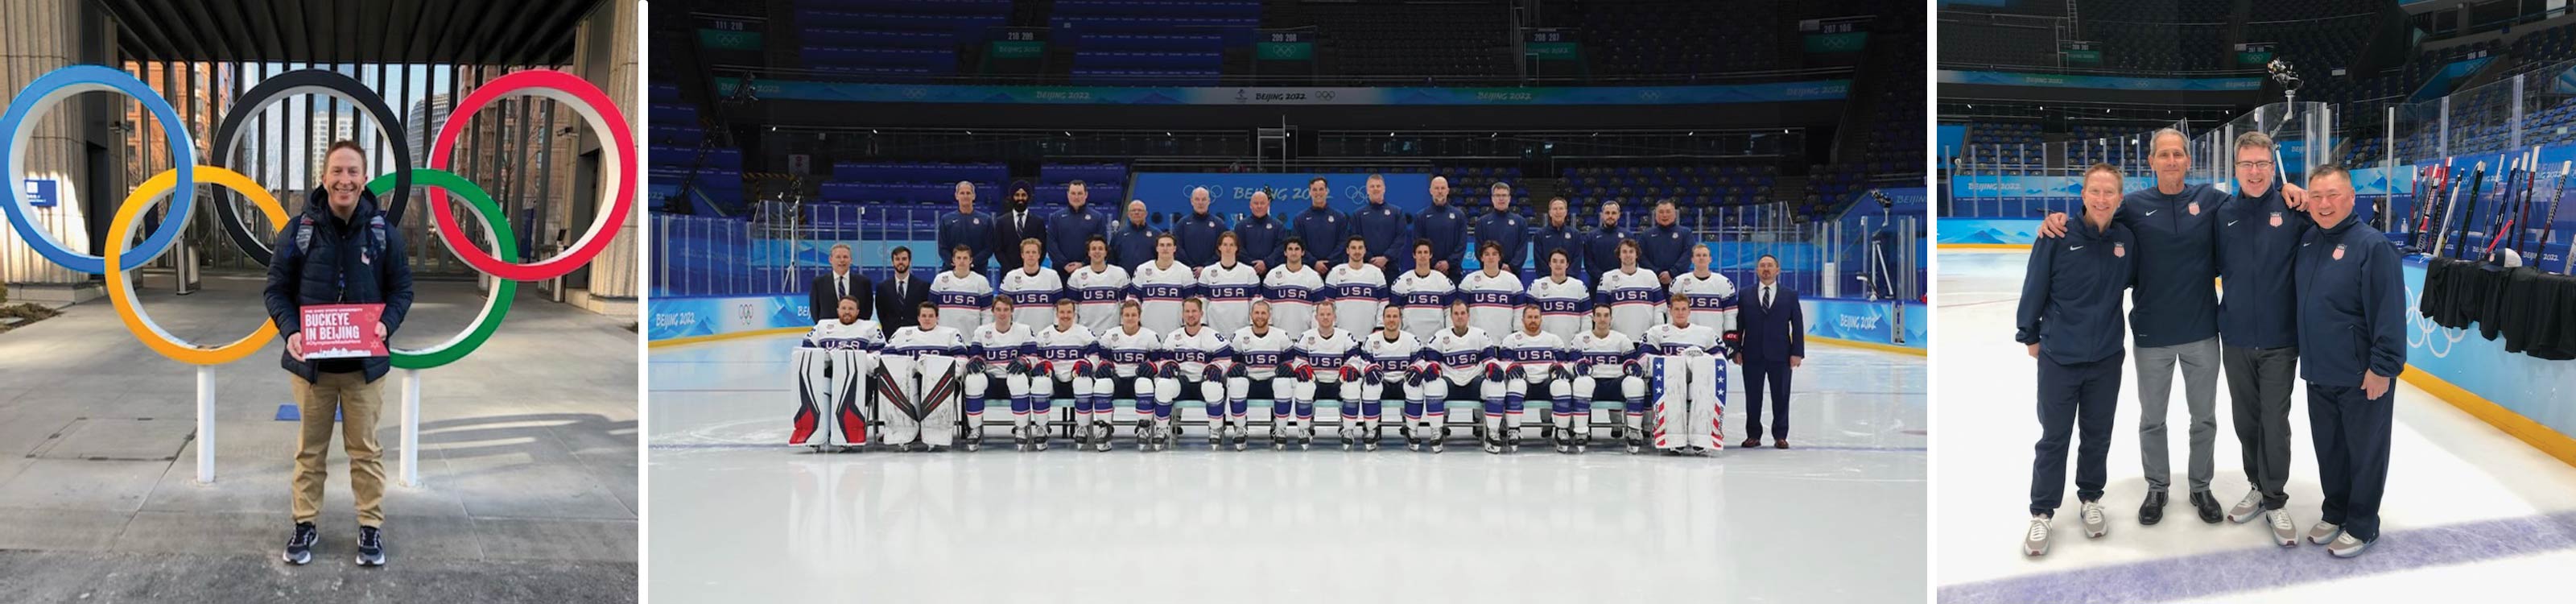 Chris Mizer and USA hockey team at Beijing Olympics 2022 